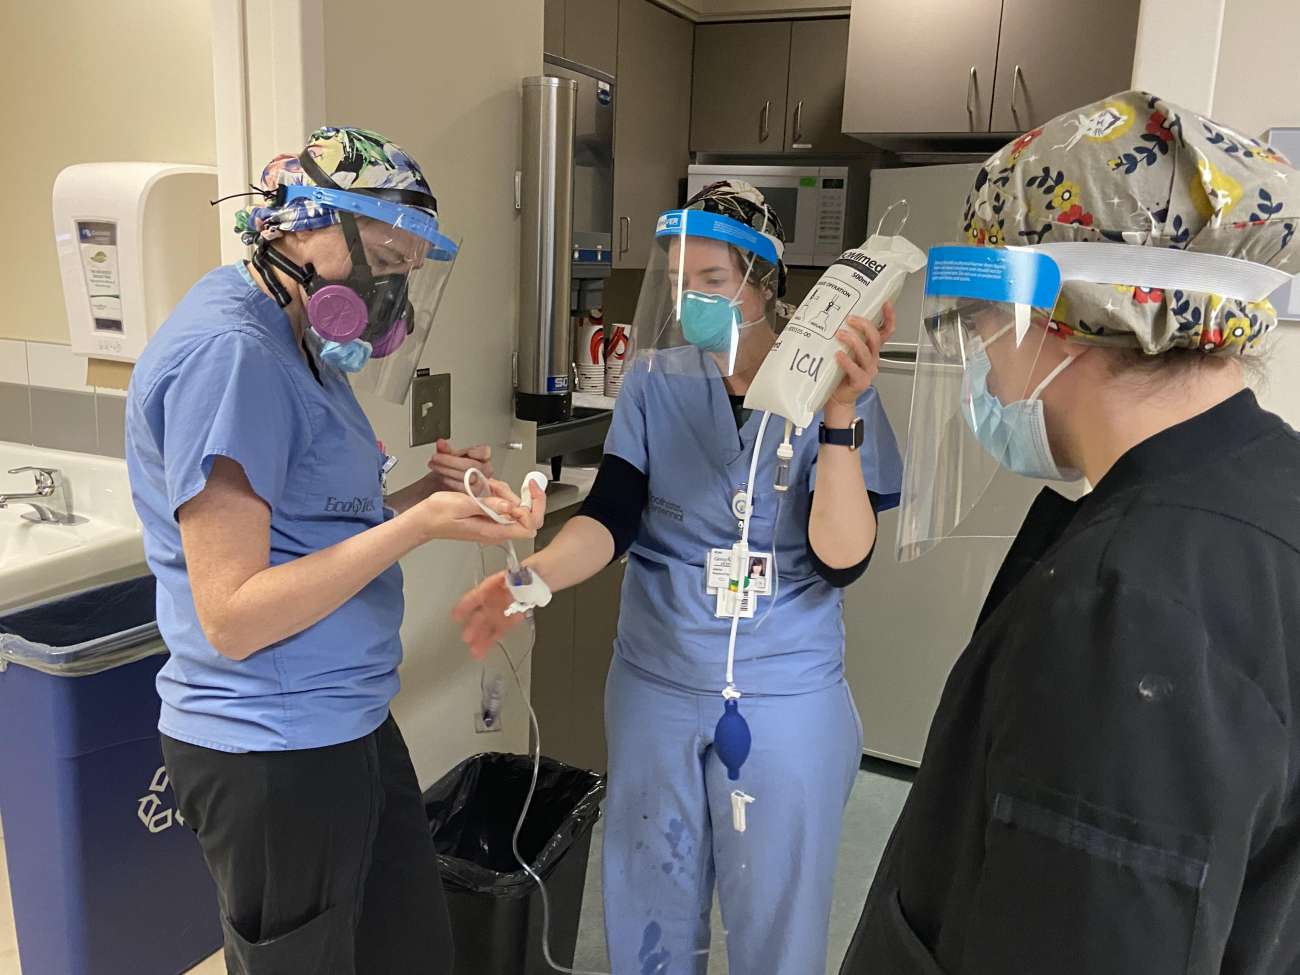 Nurses preparing to change IV